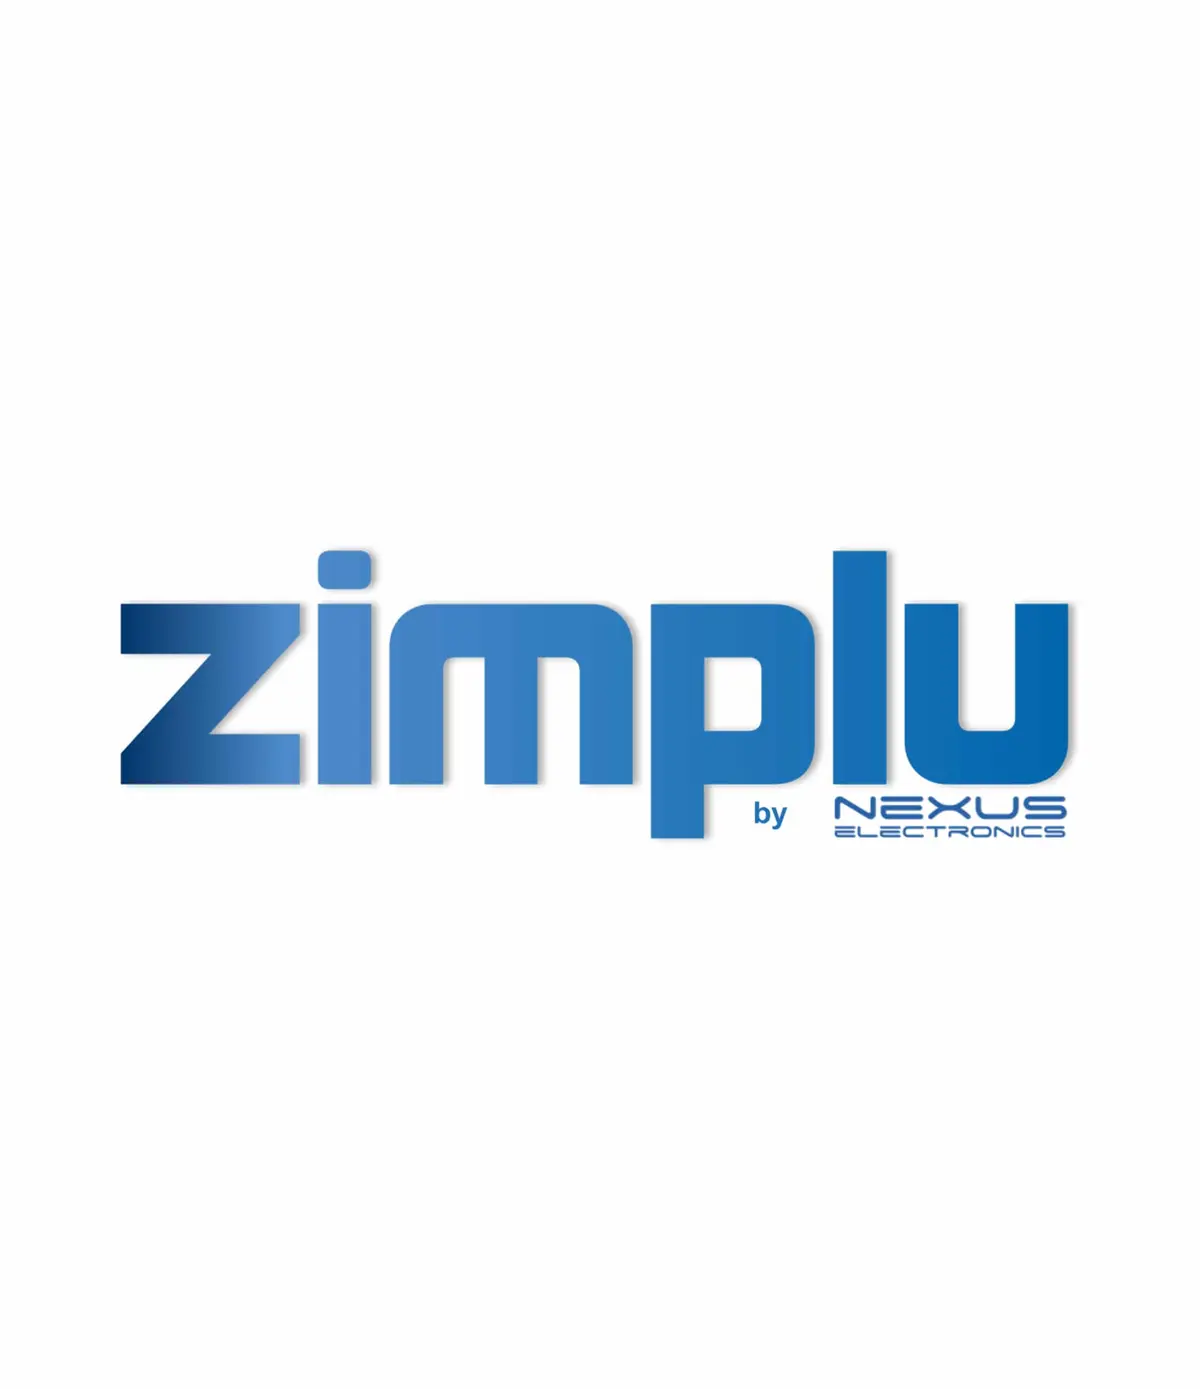 Zimplu by Nexus Electronics